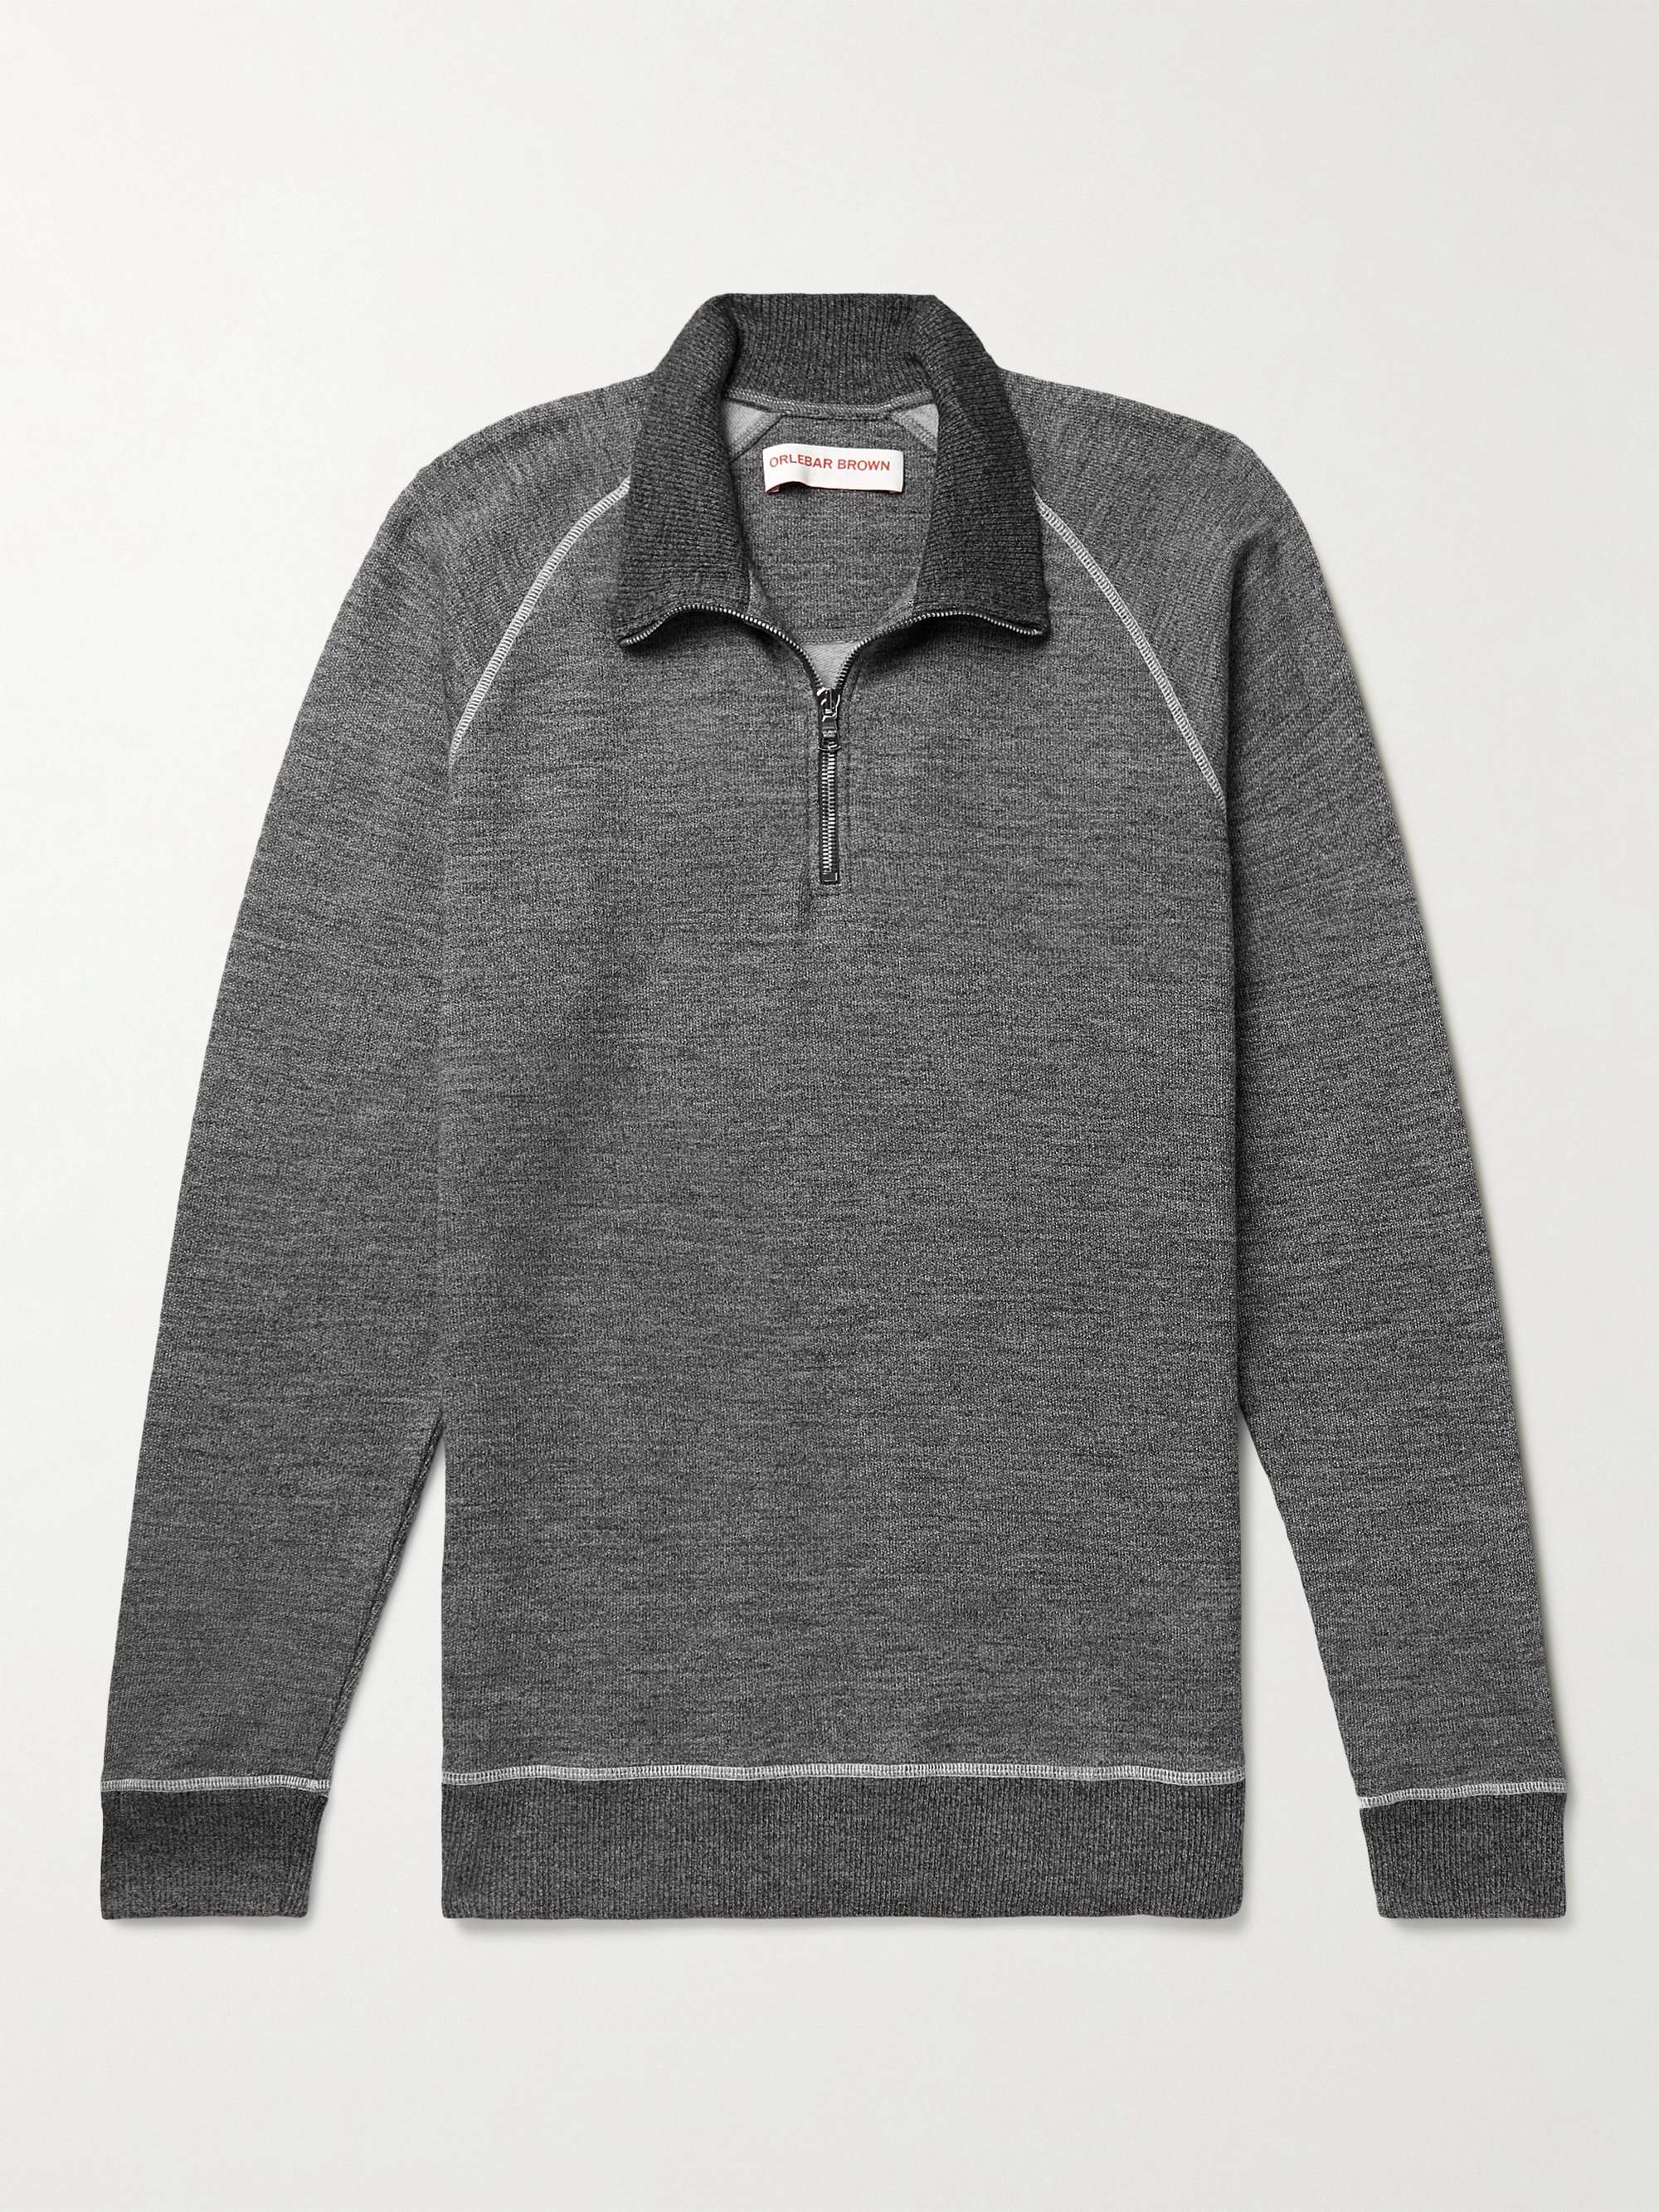 ORLEBAR BROWN Isar Cotton and Wool-Blend Half-Zip Sweatshirt